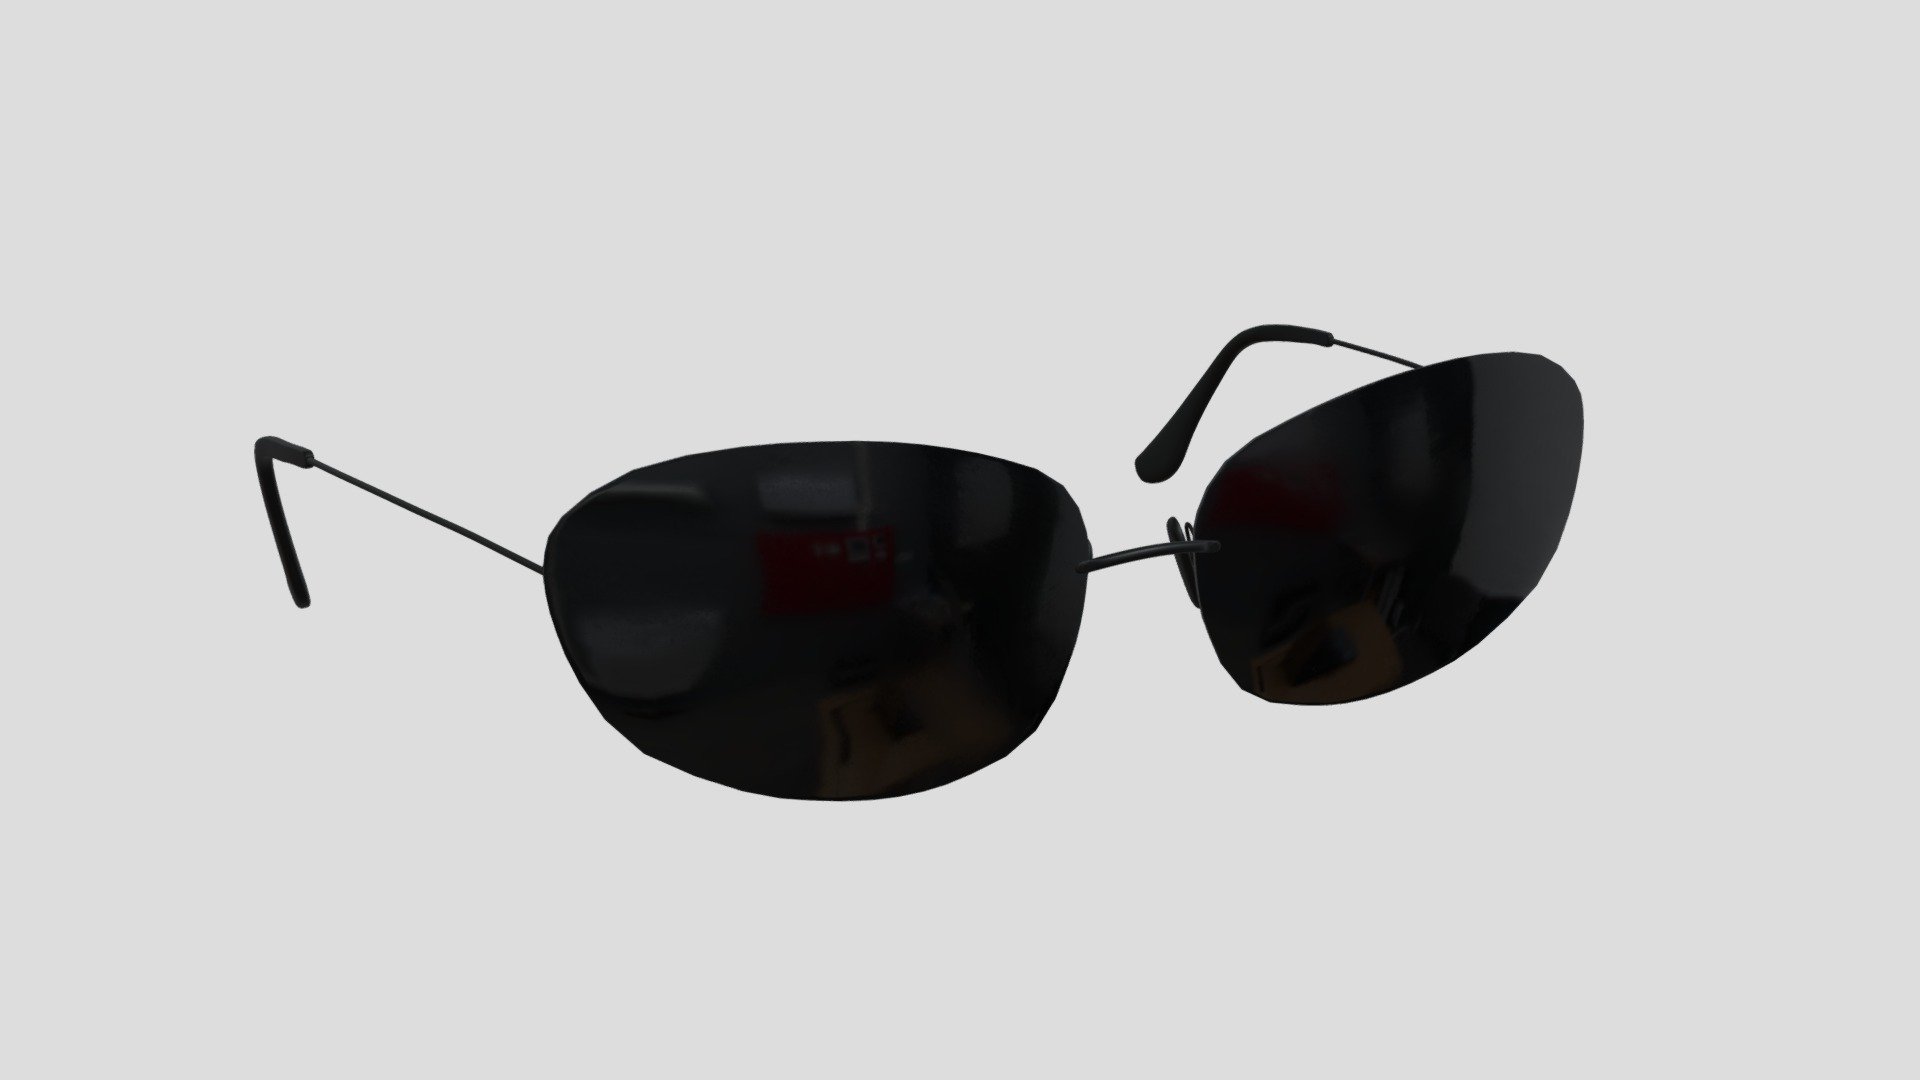 Matrix Neo Sunglasses 3d Model By Joelbesty 9ca1806 Sketchfab